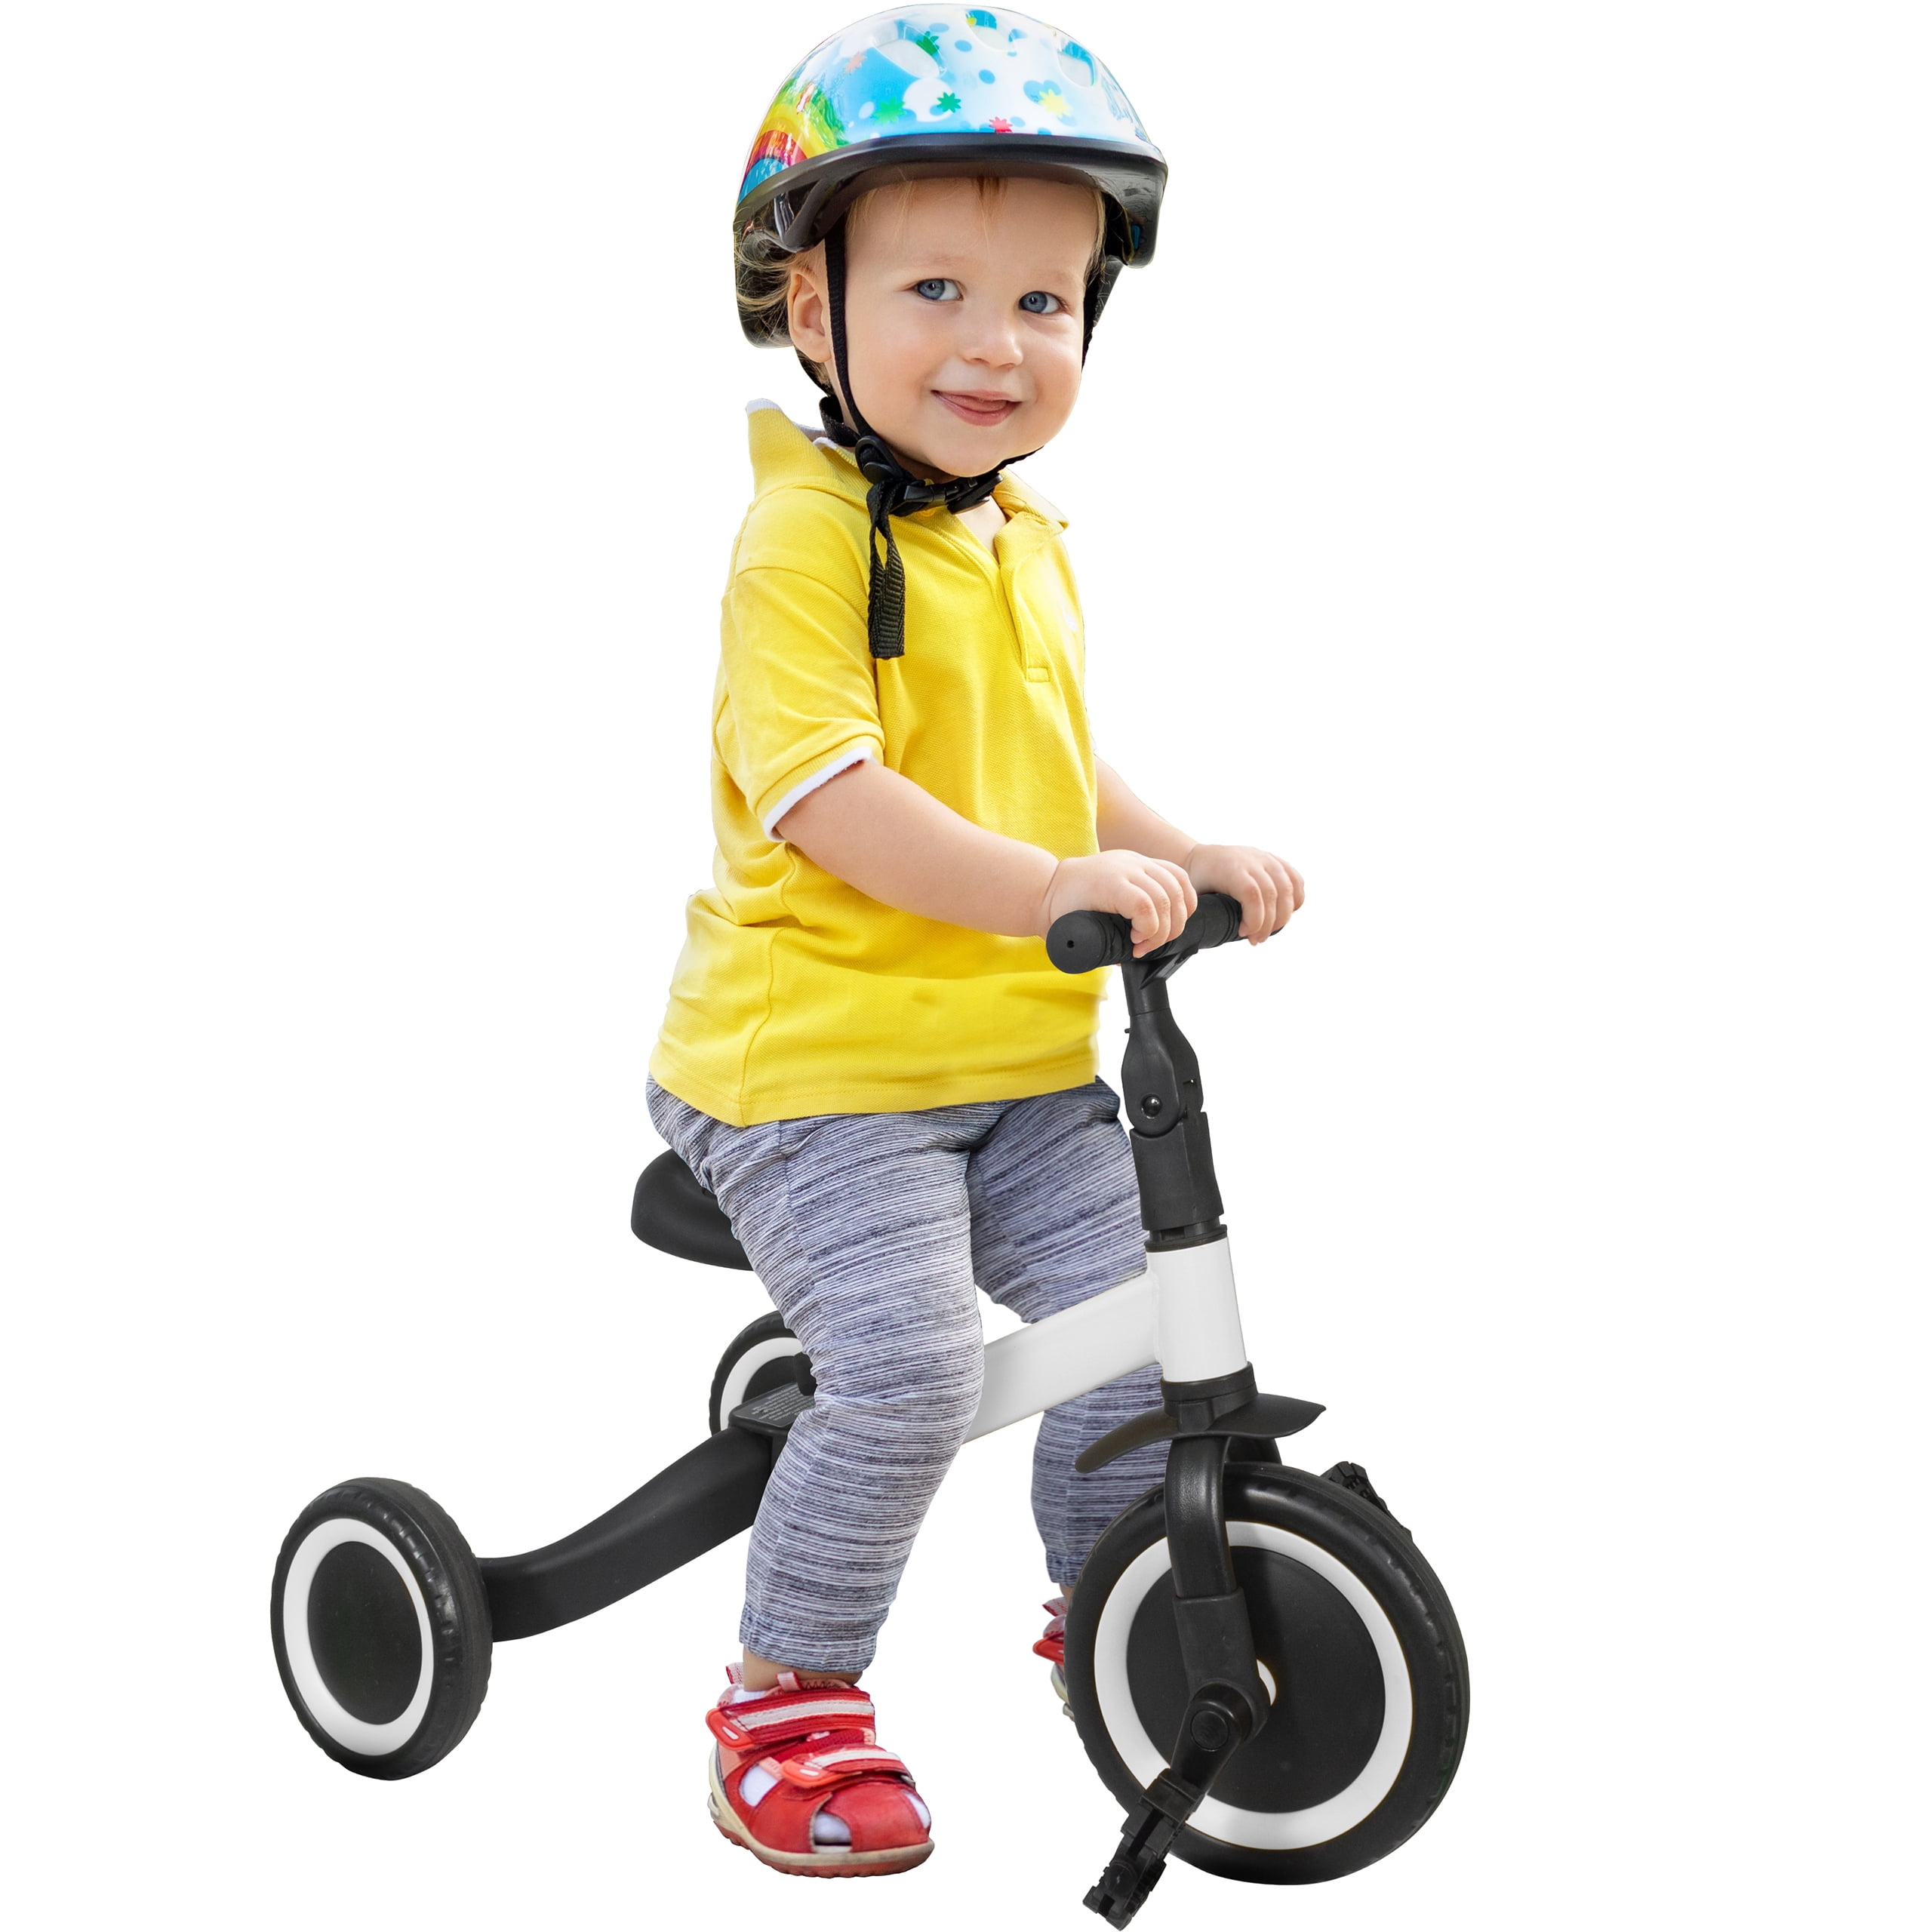 Mini Adjustable Balance bike for toddlers and kids age 1-4years 